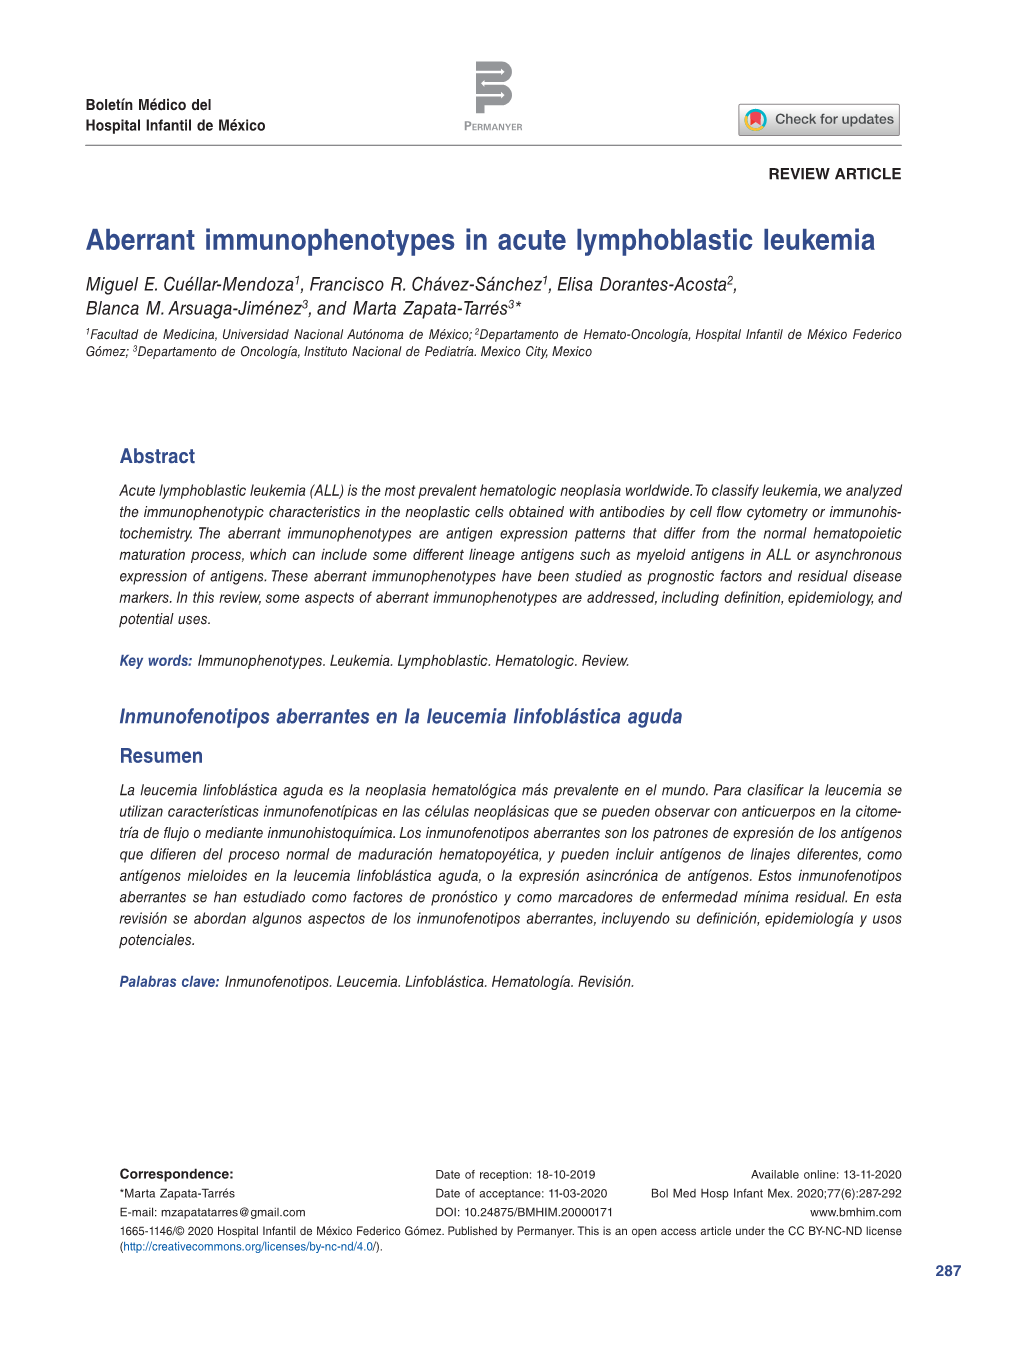 Aberrant Immunophenotypes in Acute Lymphoblastic Leukemia